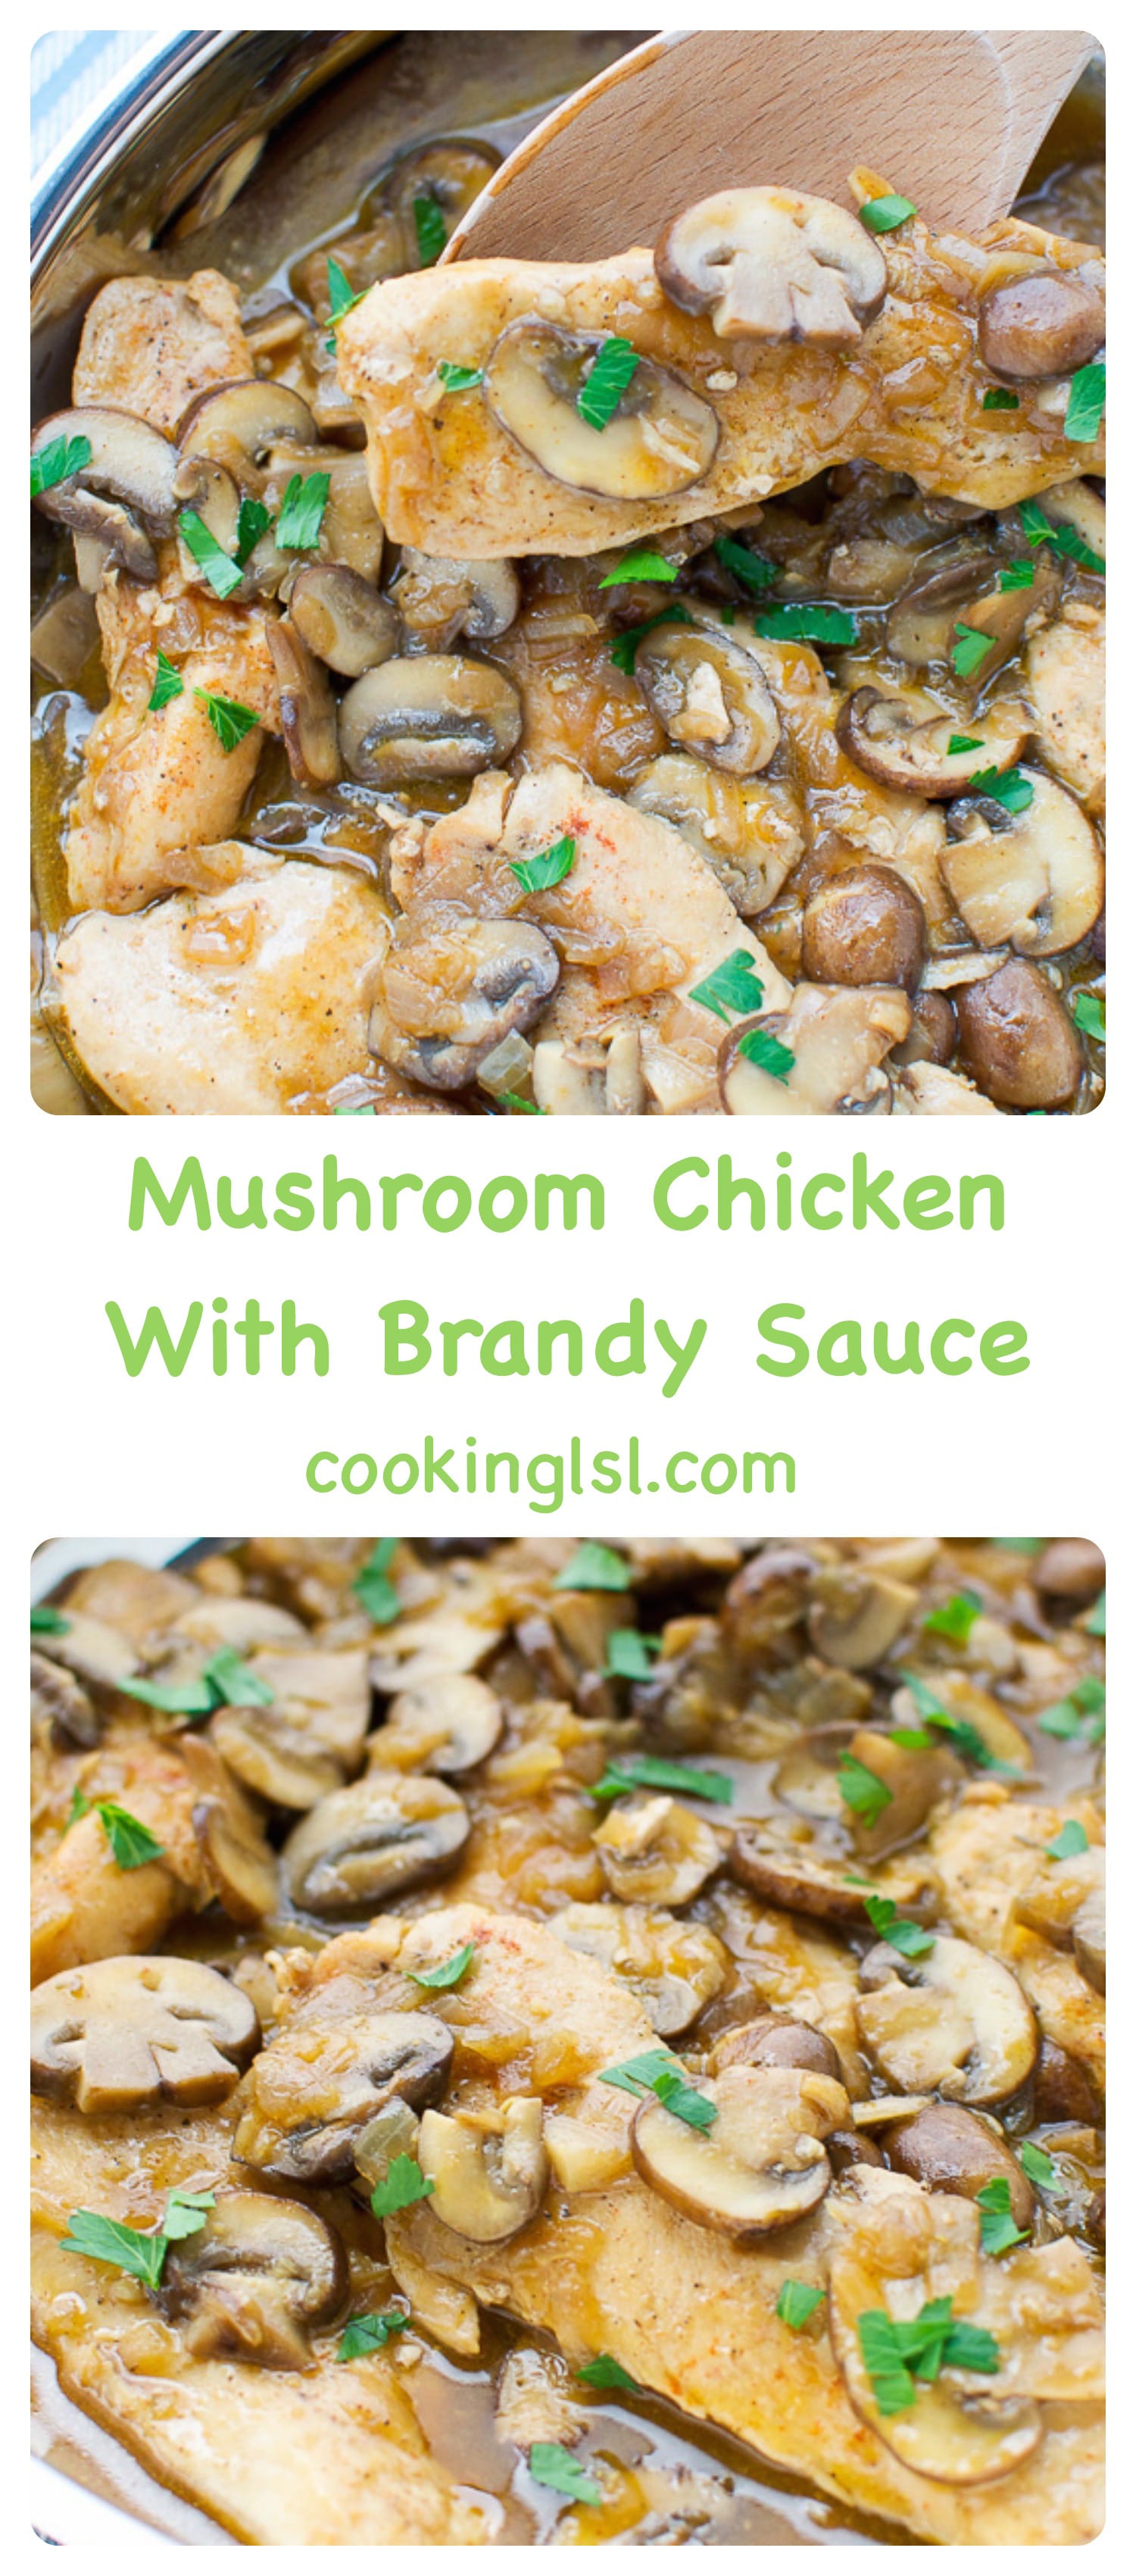 Mushroom Chicken With Brandy Sauce Recipe